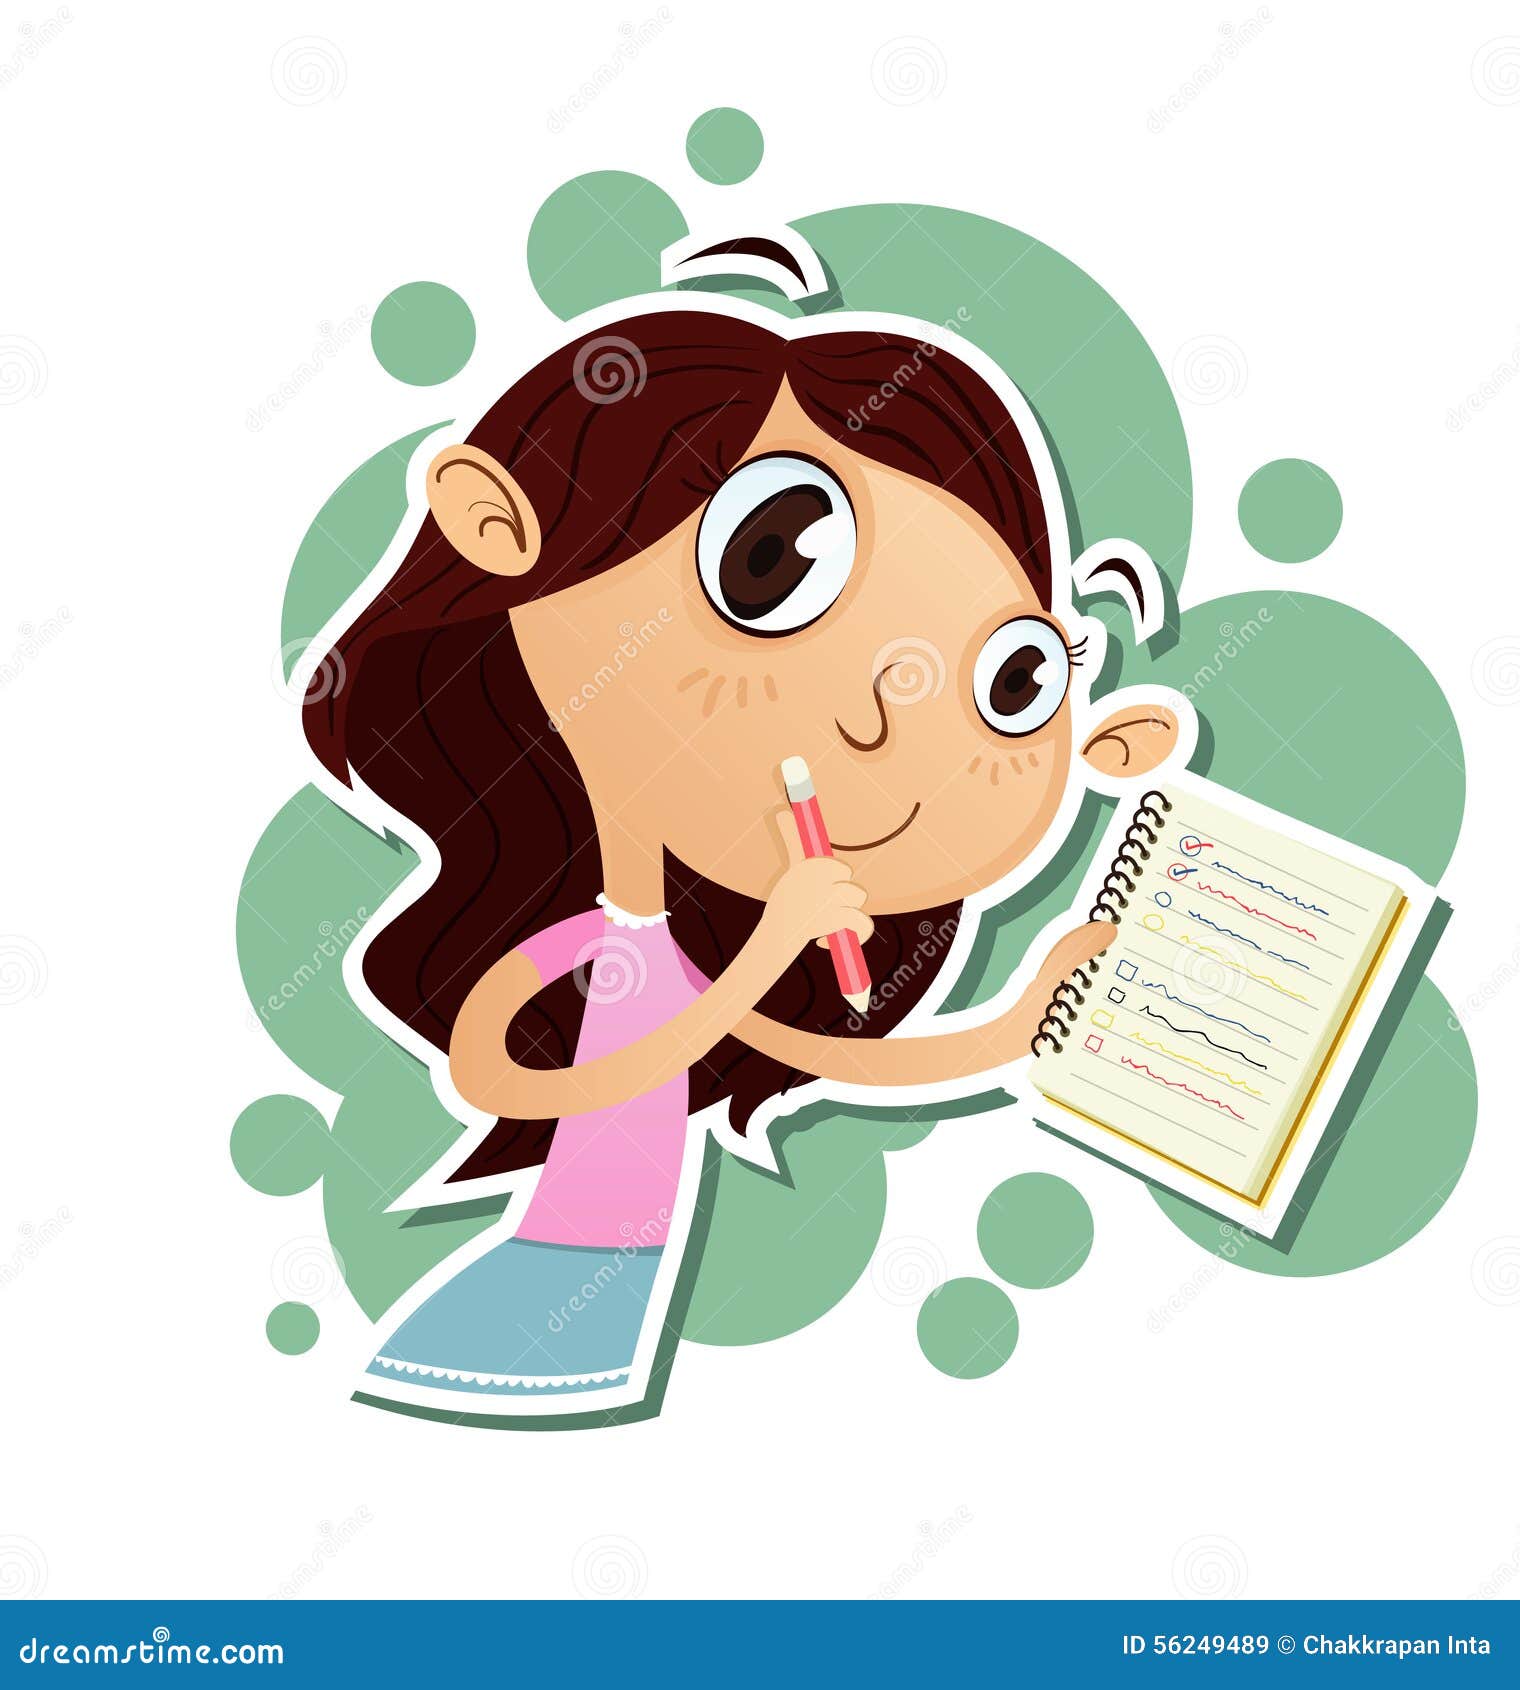 Cartoon Girl Taking Notes stock vector. Illustration of plan - 56249489